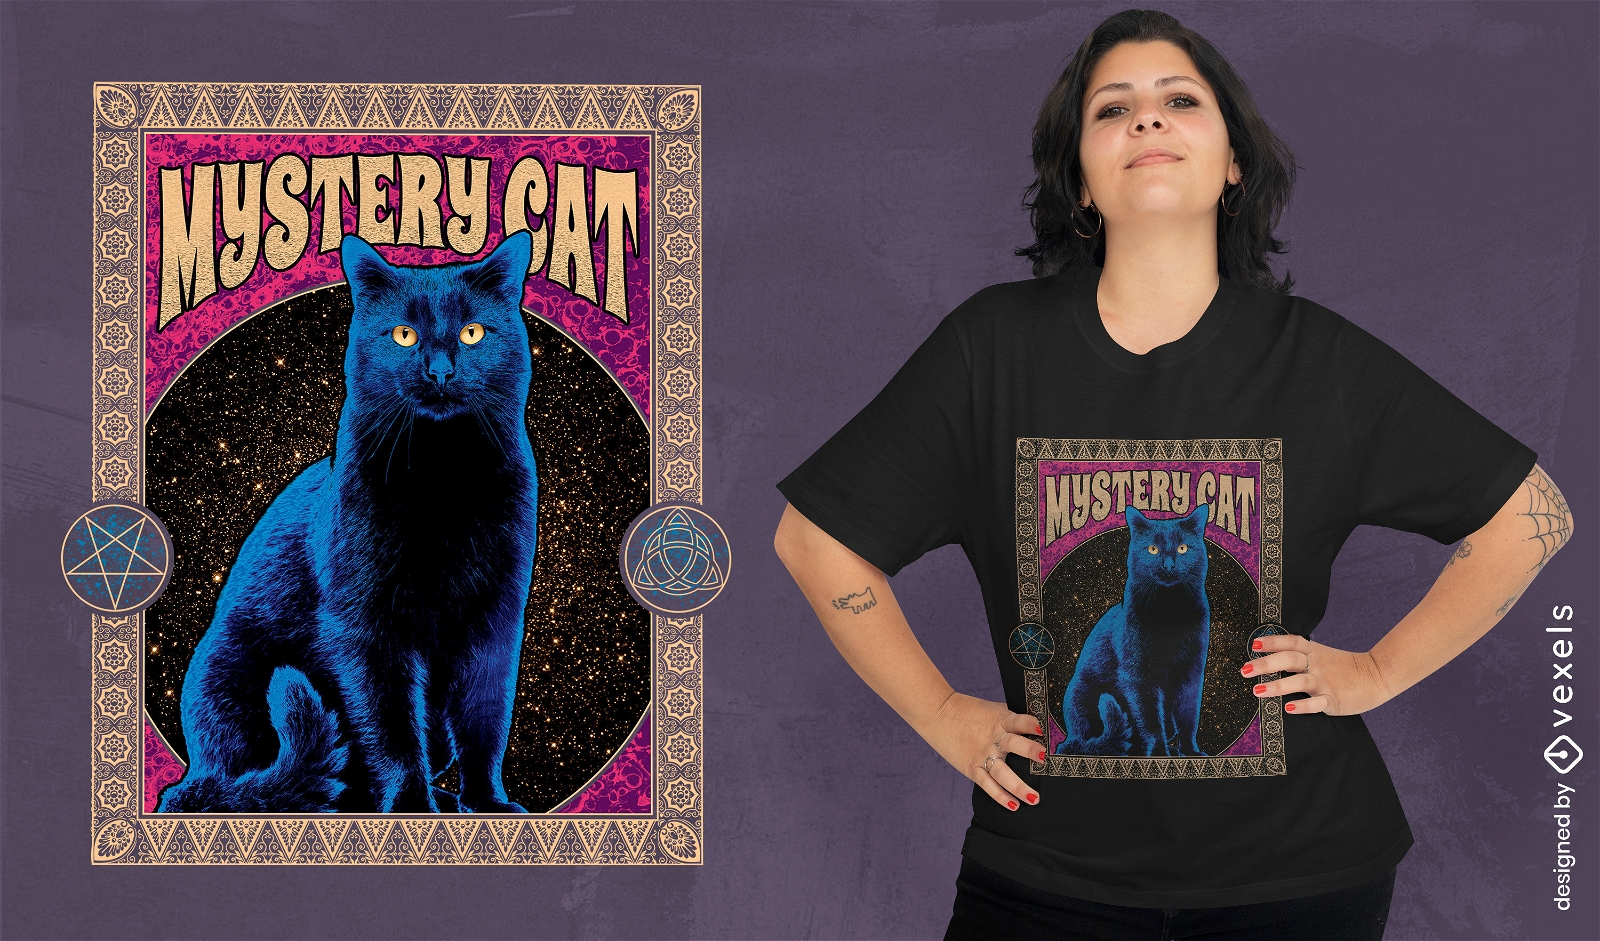 Black cat mystery PSD t-shirt design